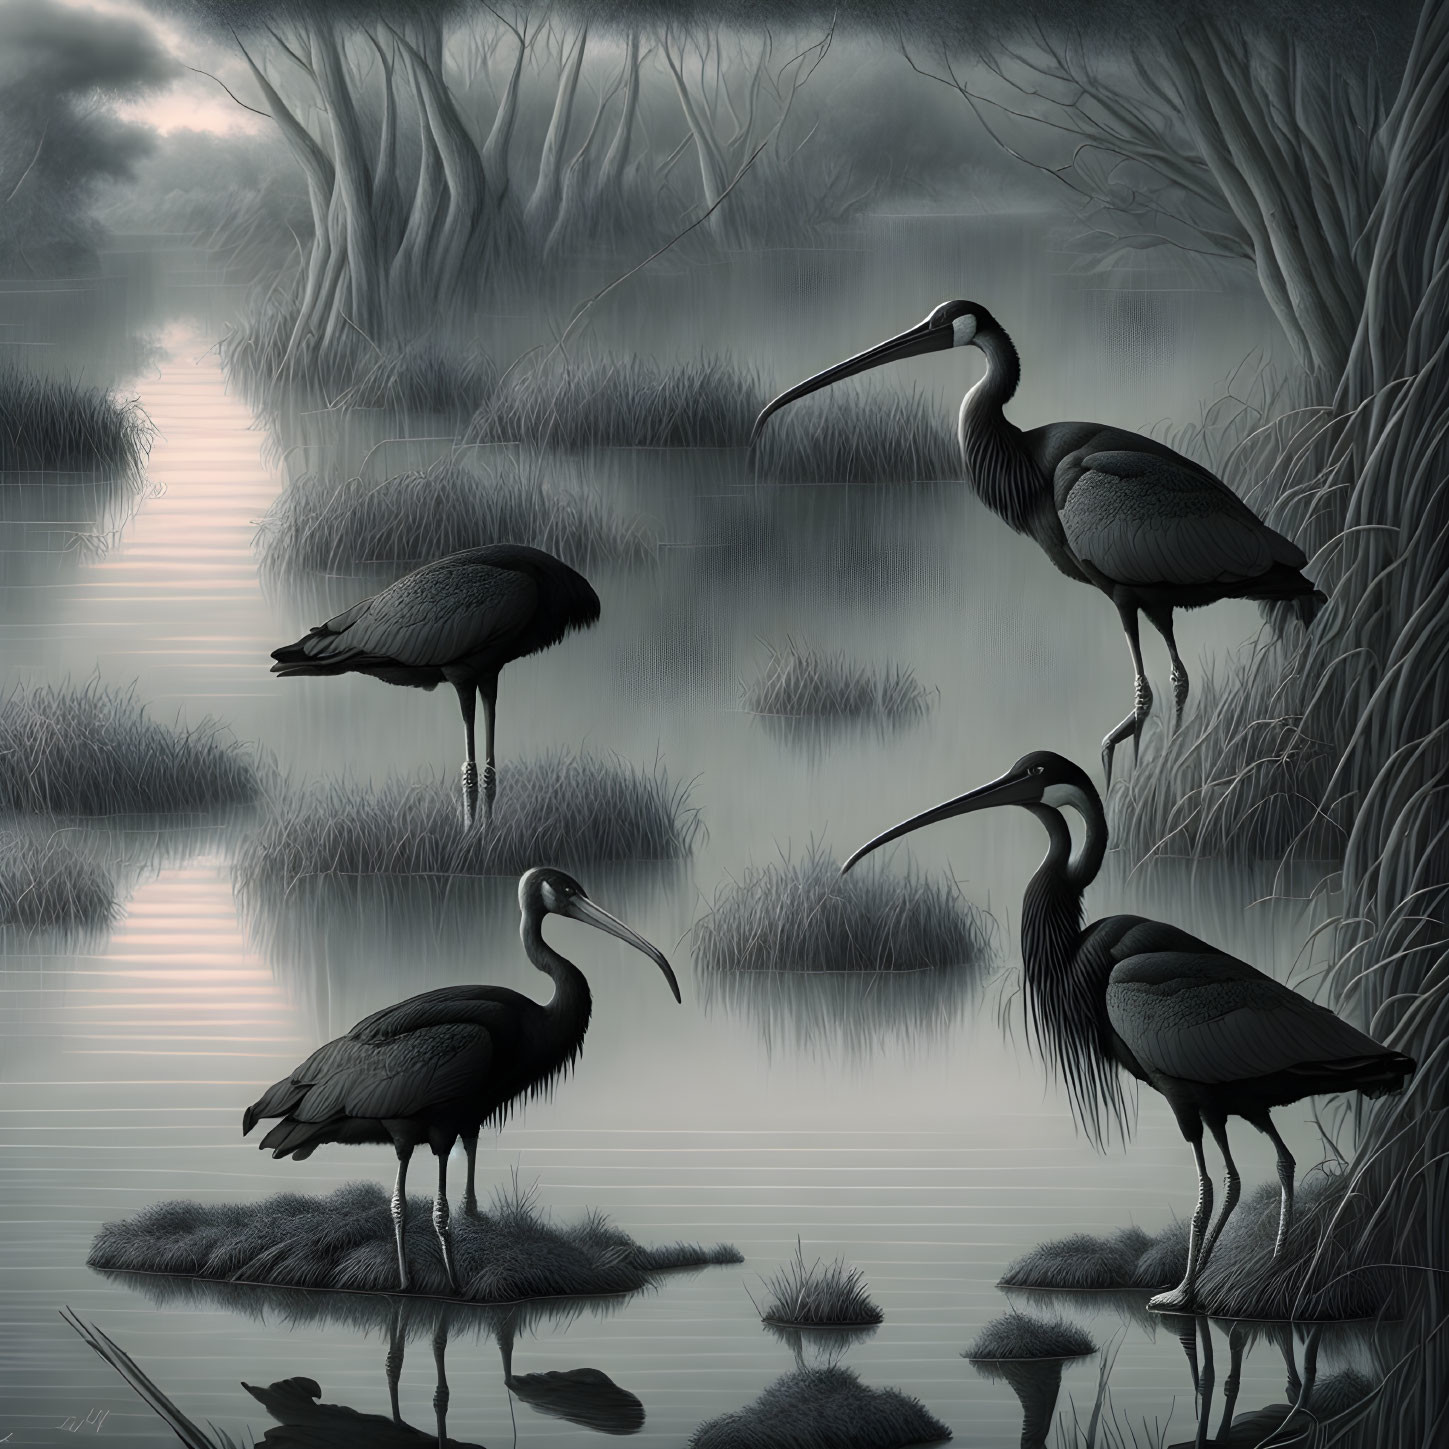 Three storks by serene water under misty sky